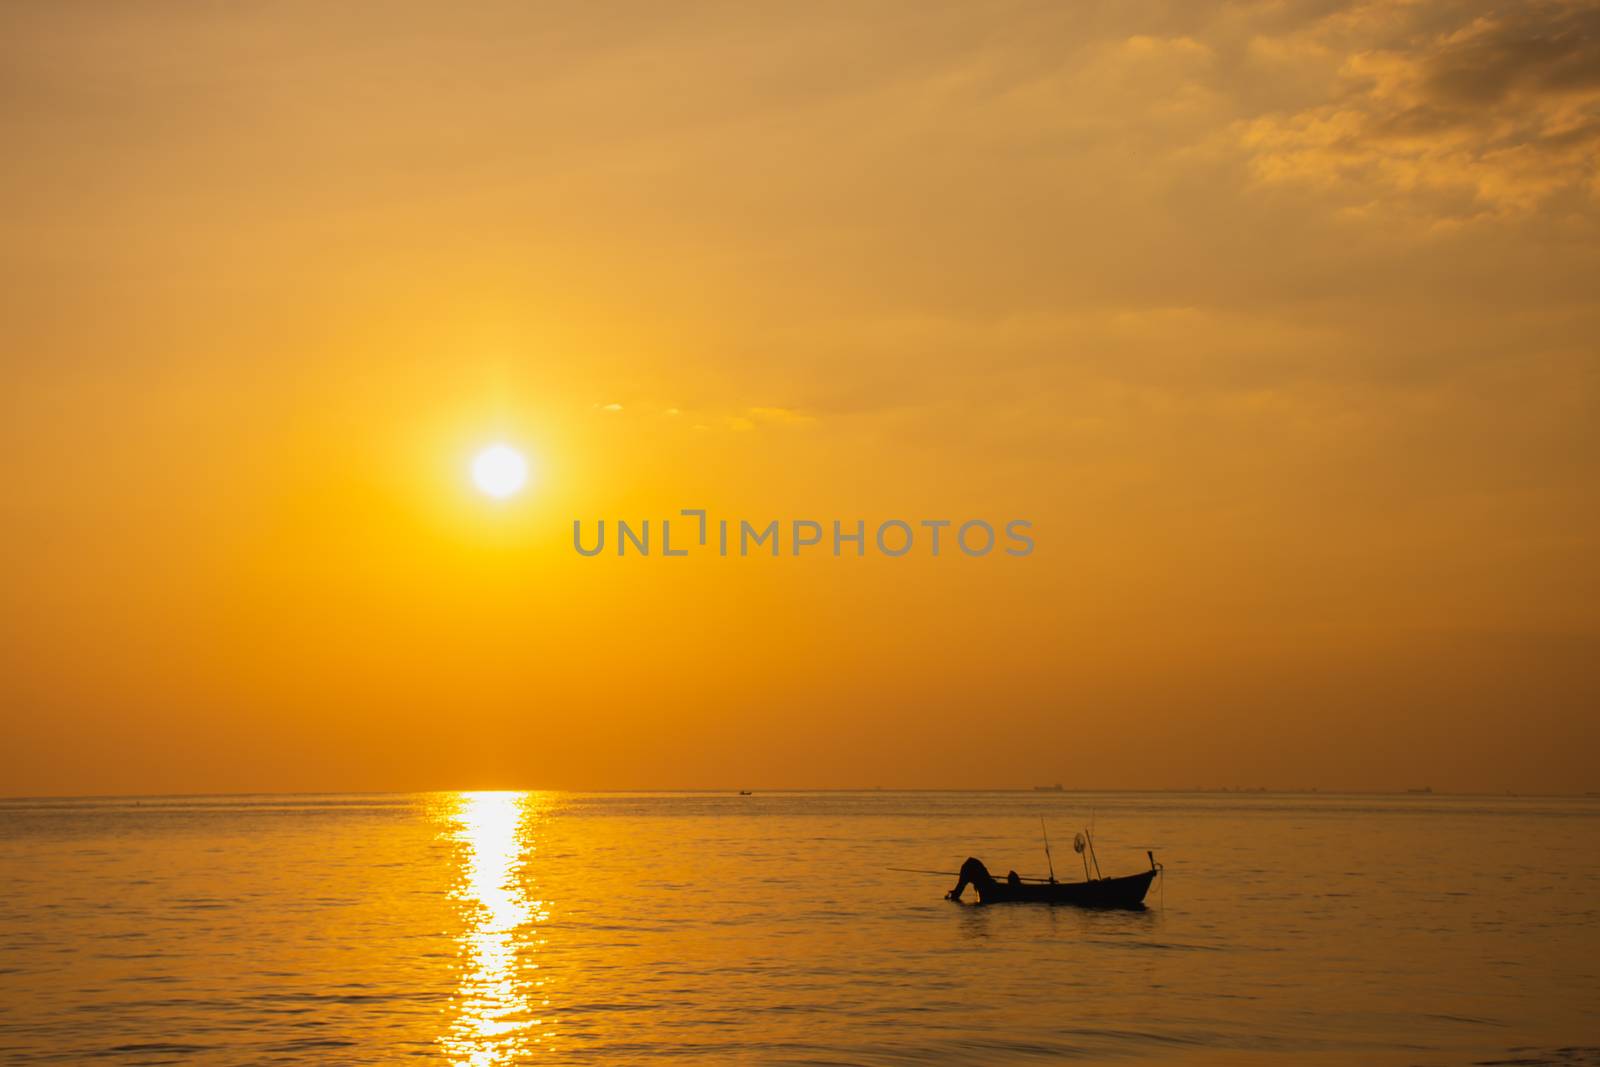 Black silhouette, beautiful sunset with a fishing boat, Mae Ramphueng Beach, Rayong Province, Thailand